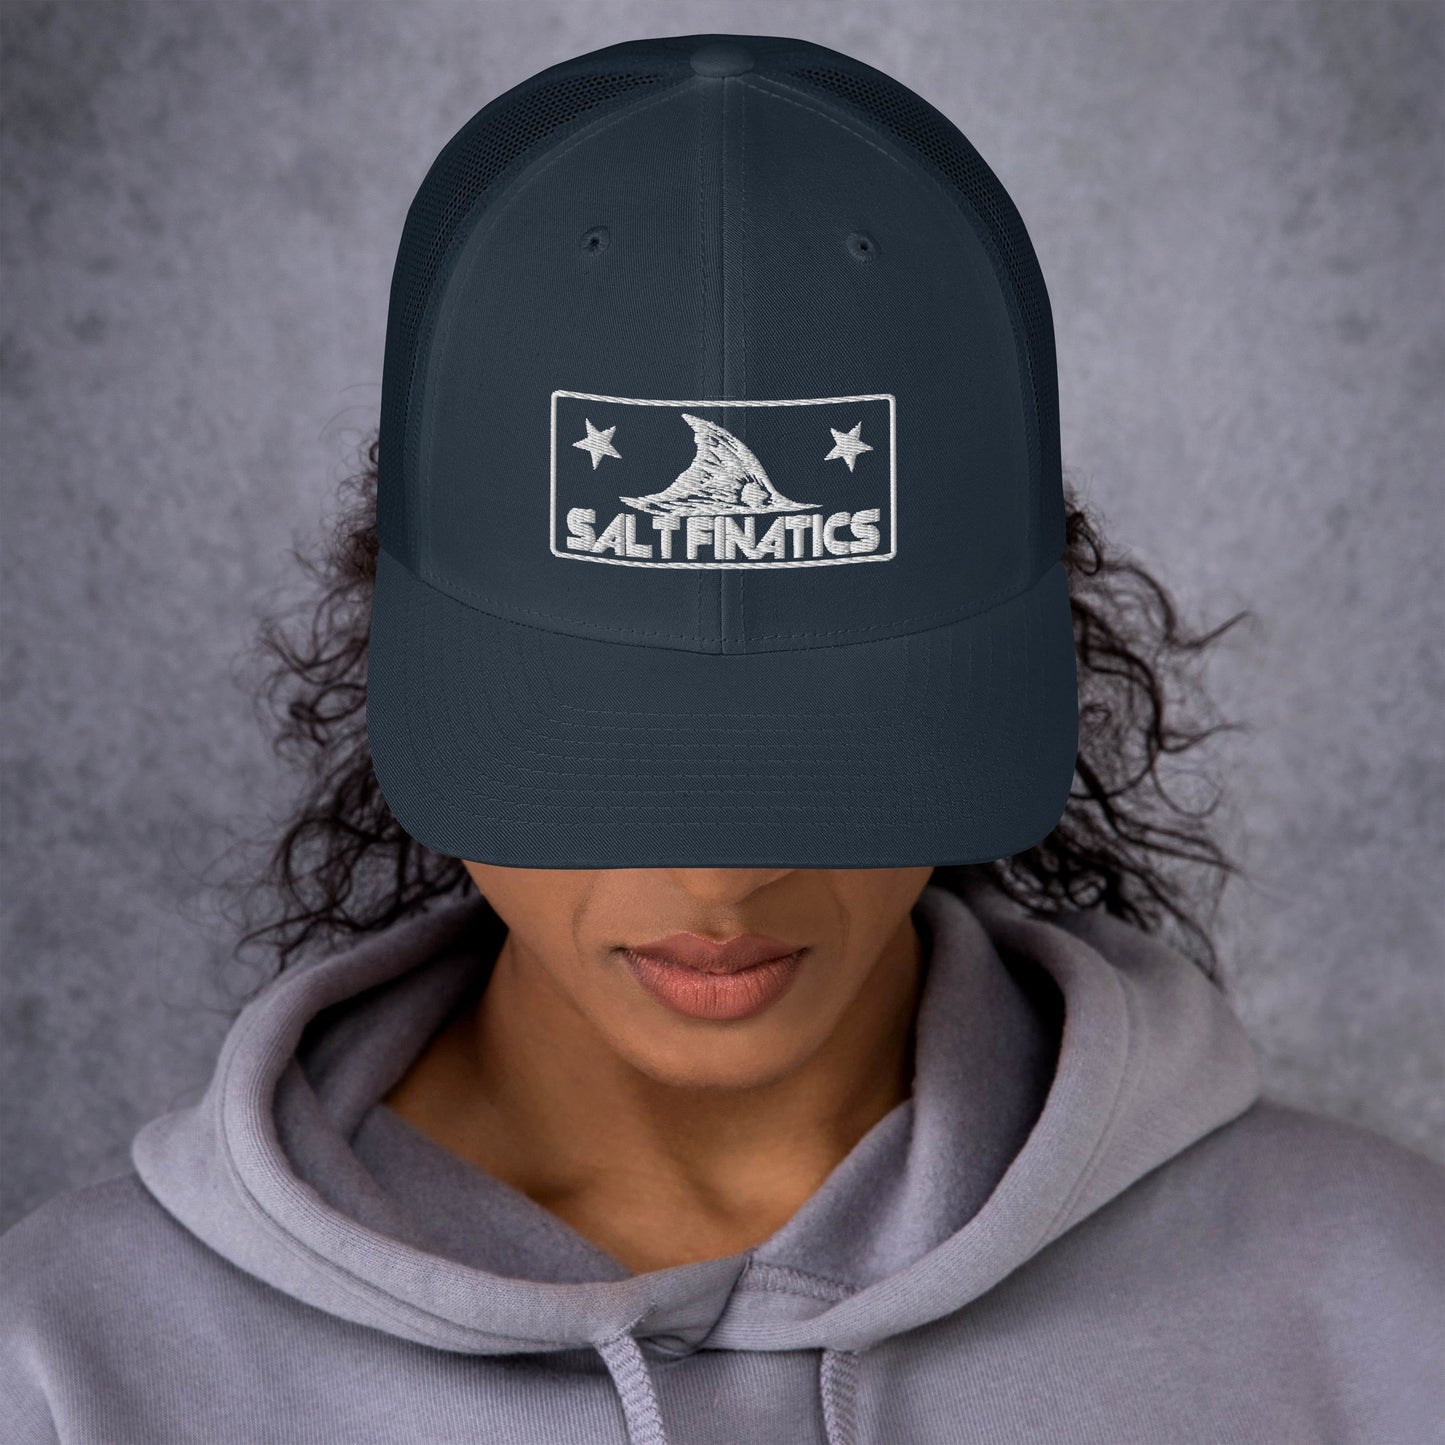 Salt Finatics Snapback Hat - White Thread